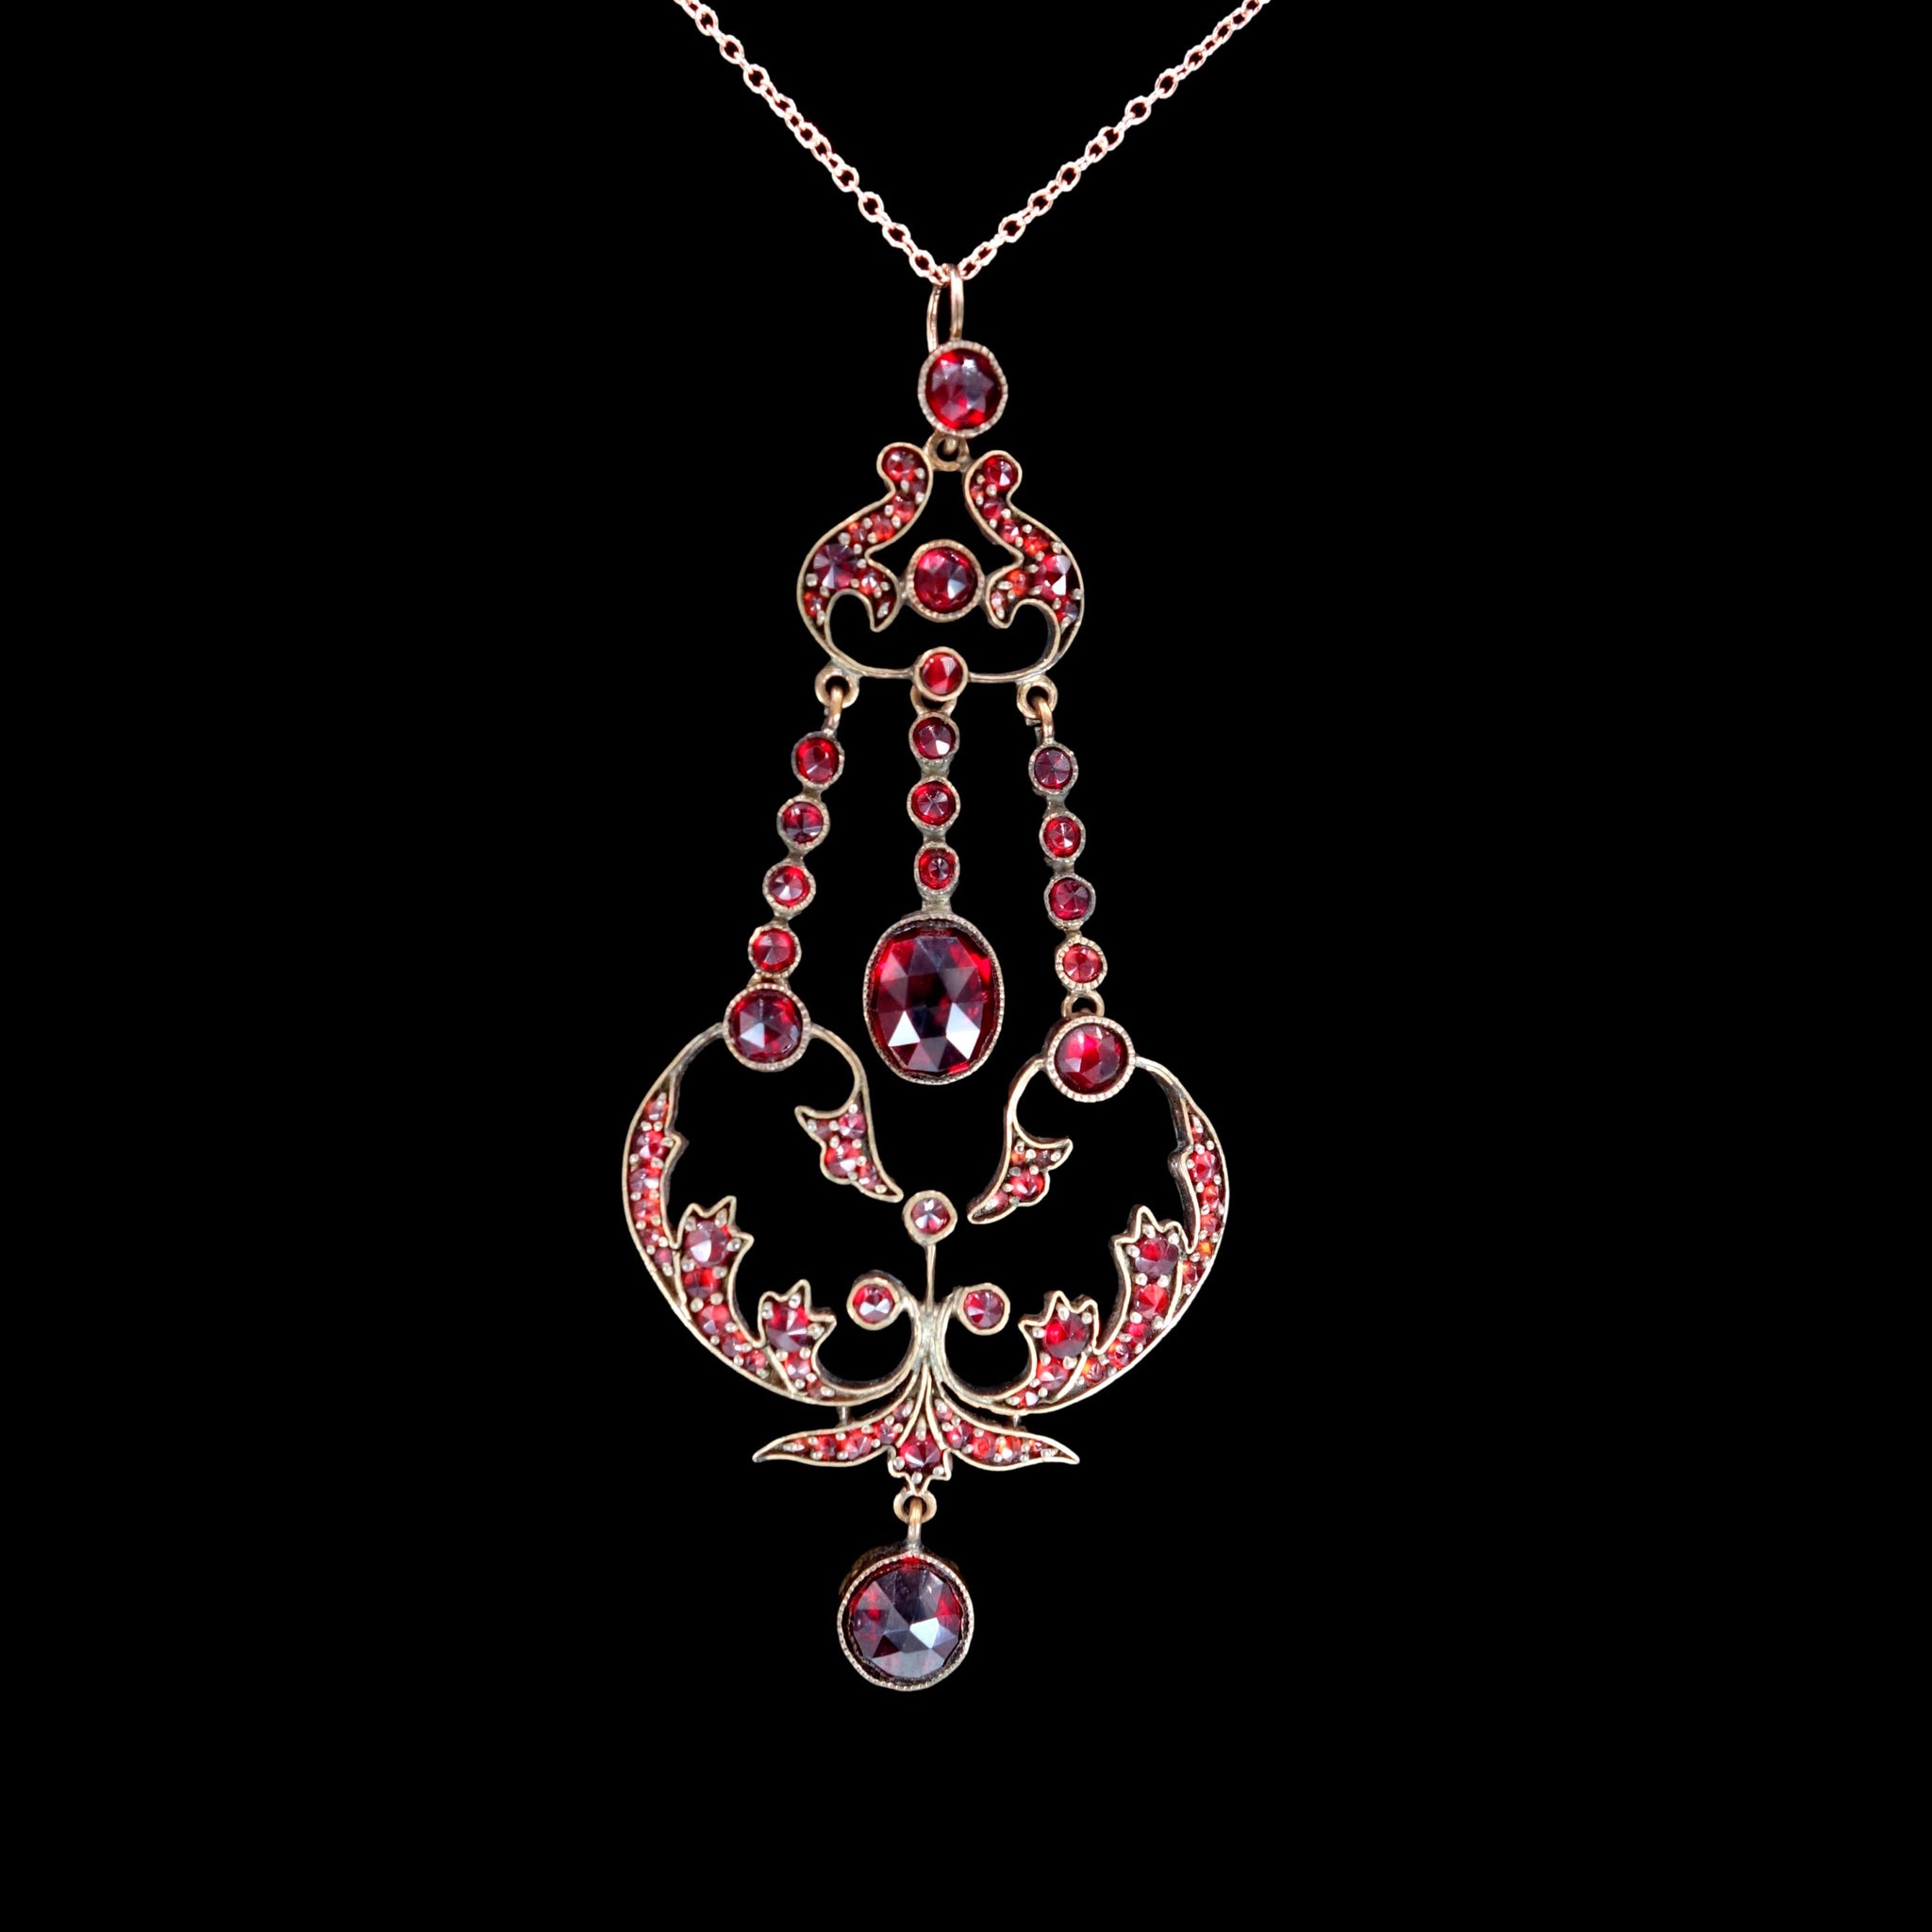 Antique Victorian Bohemian Garnet Necklace - Elegant Finishing Touches